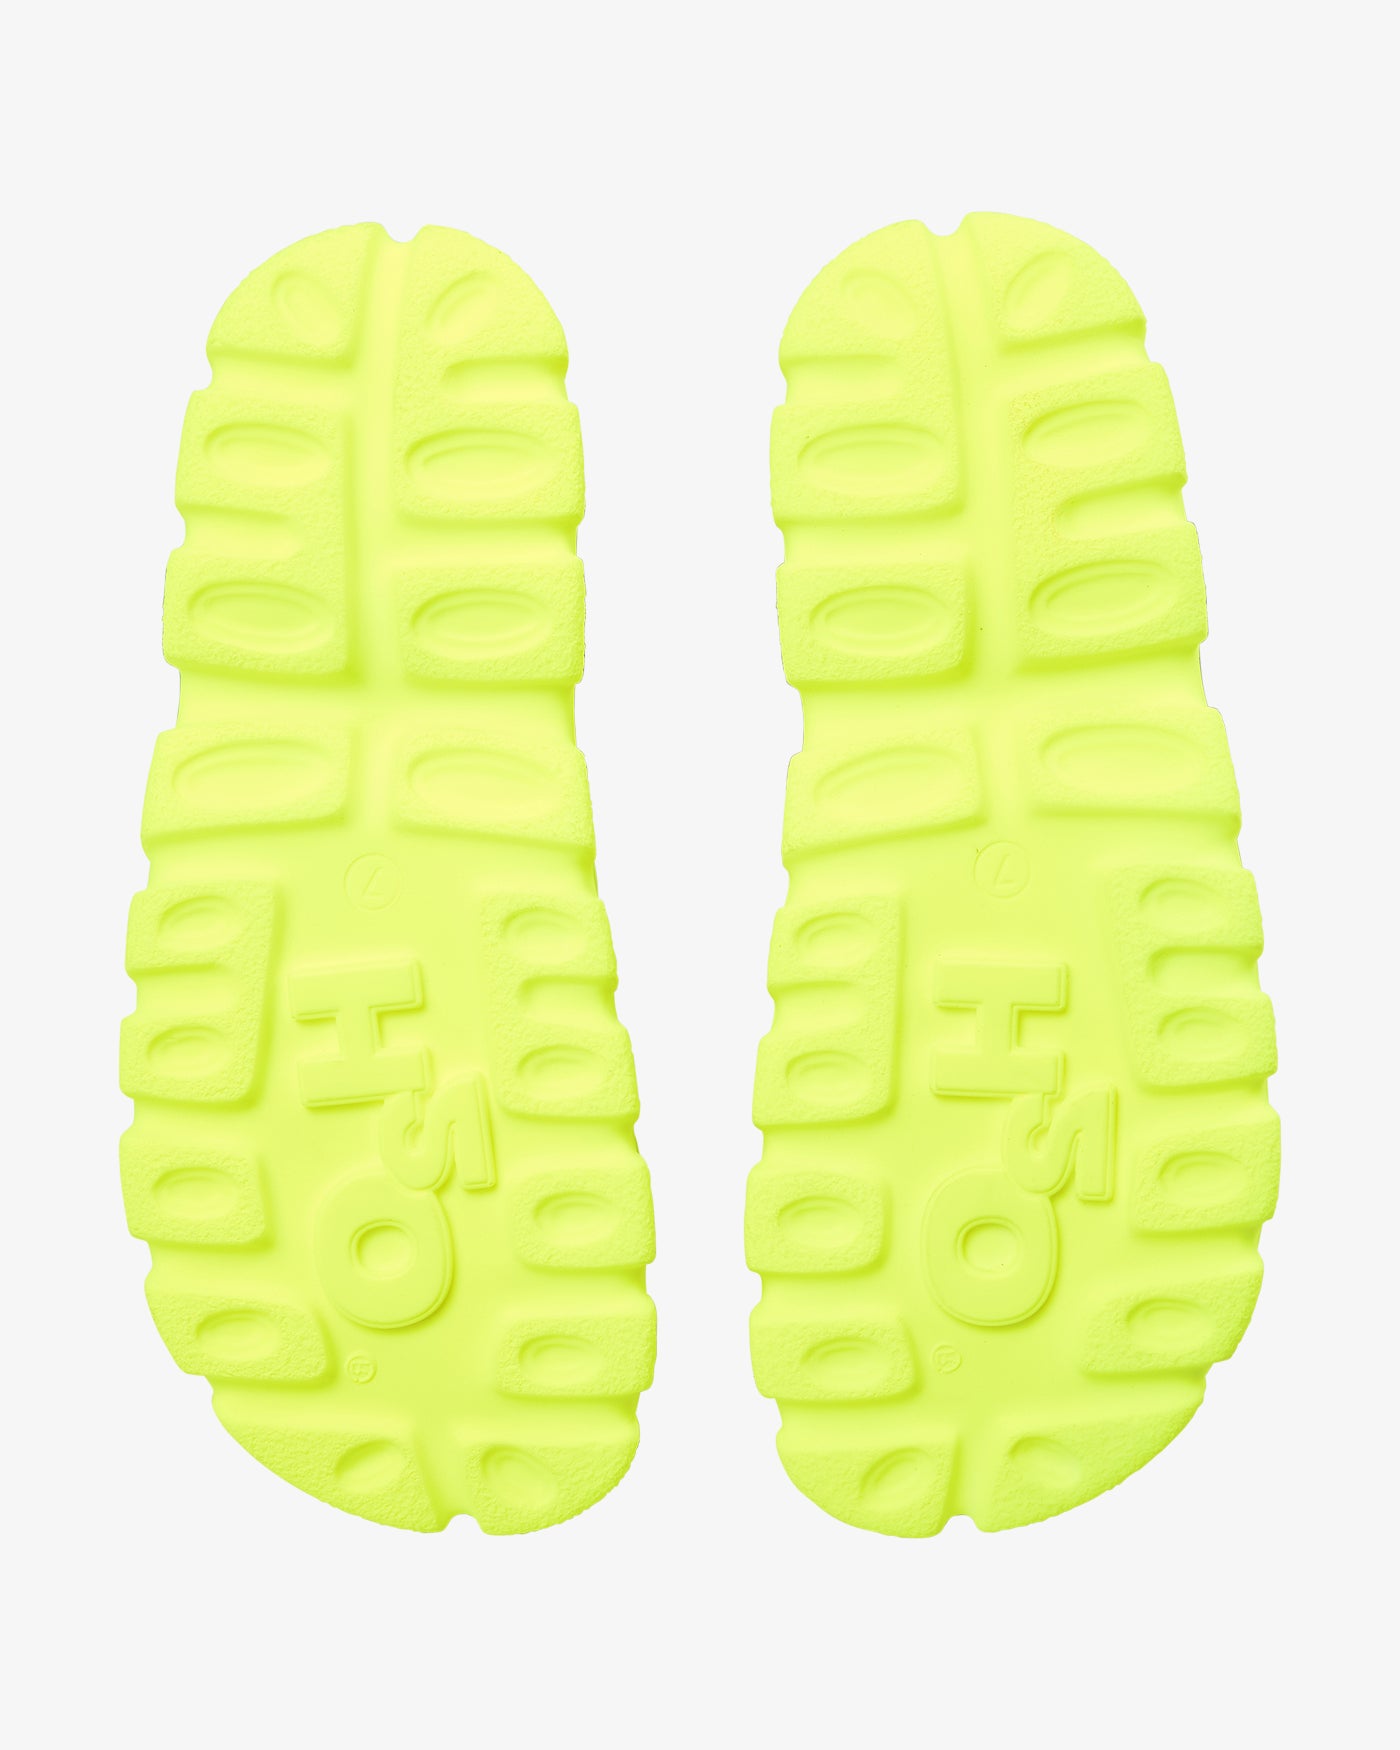 H2O Select Trek Badesandal Sandal 5030 Neon Yellow